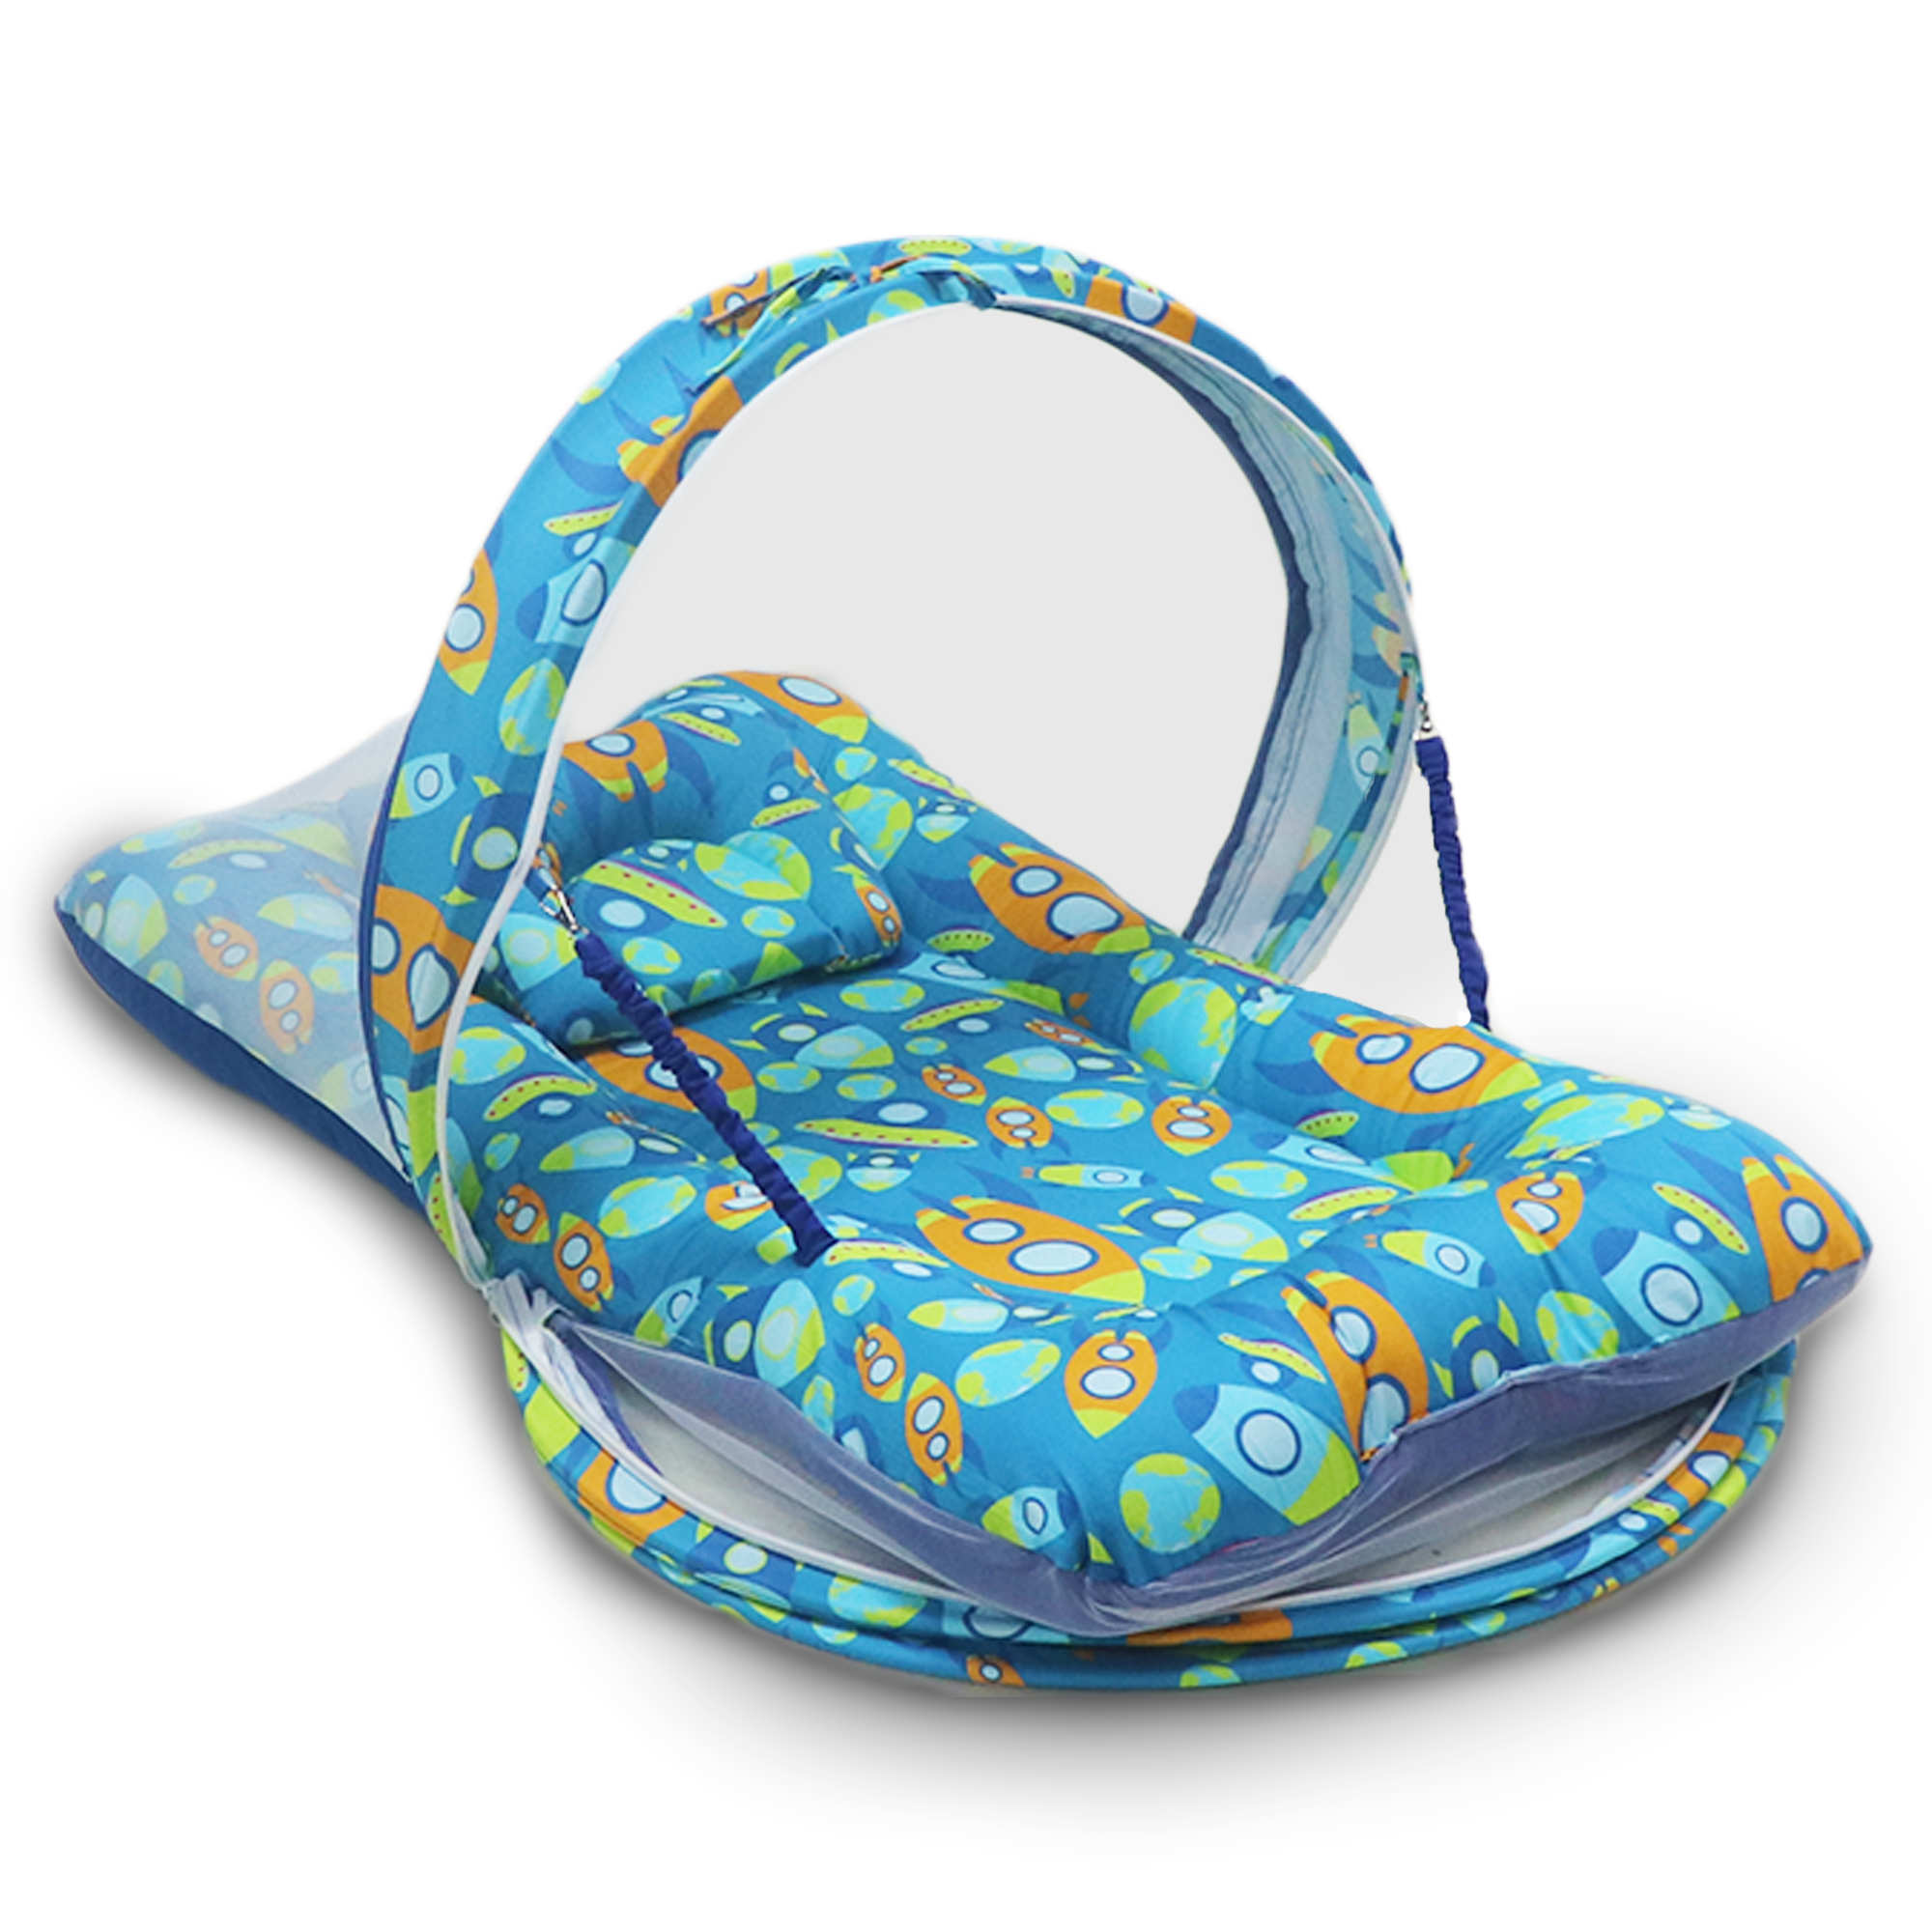 Aztec Rocket -  Kradyl Kroft Bassinet Style Mosquito Net Bedding for Infants